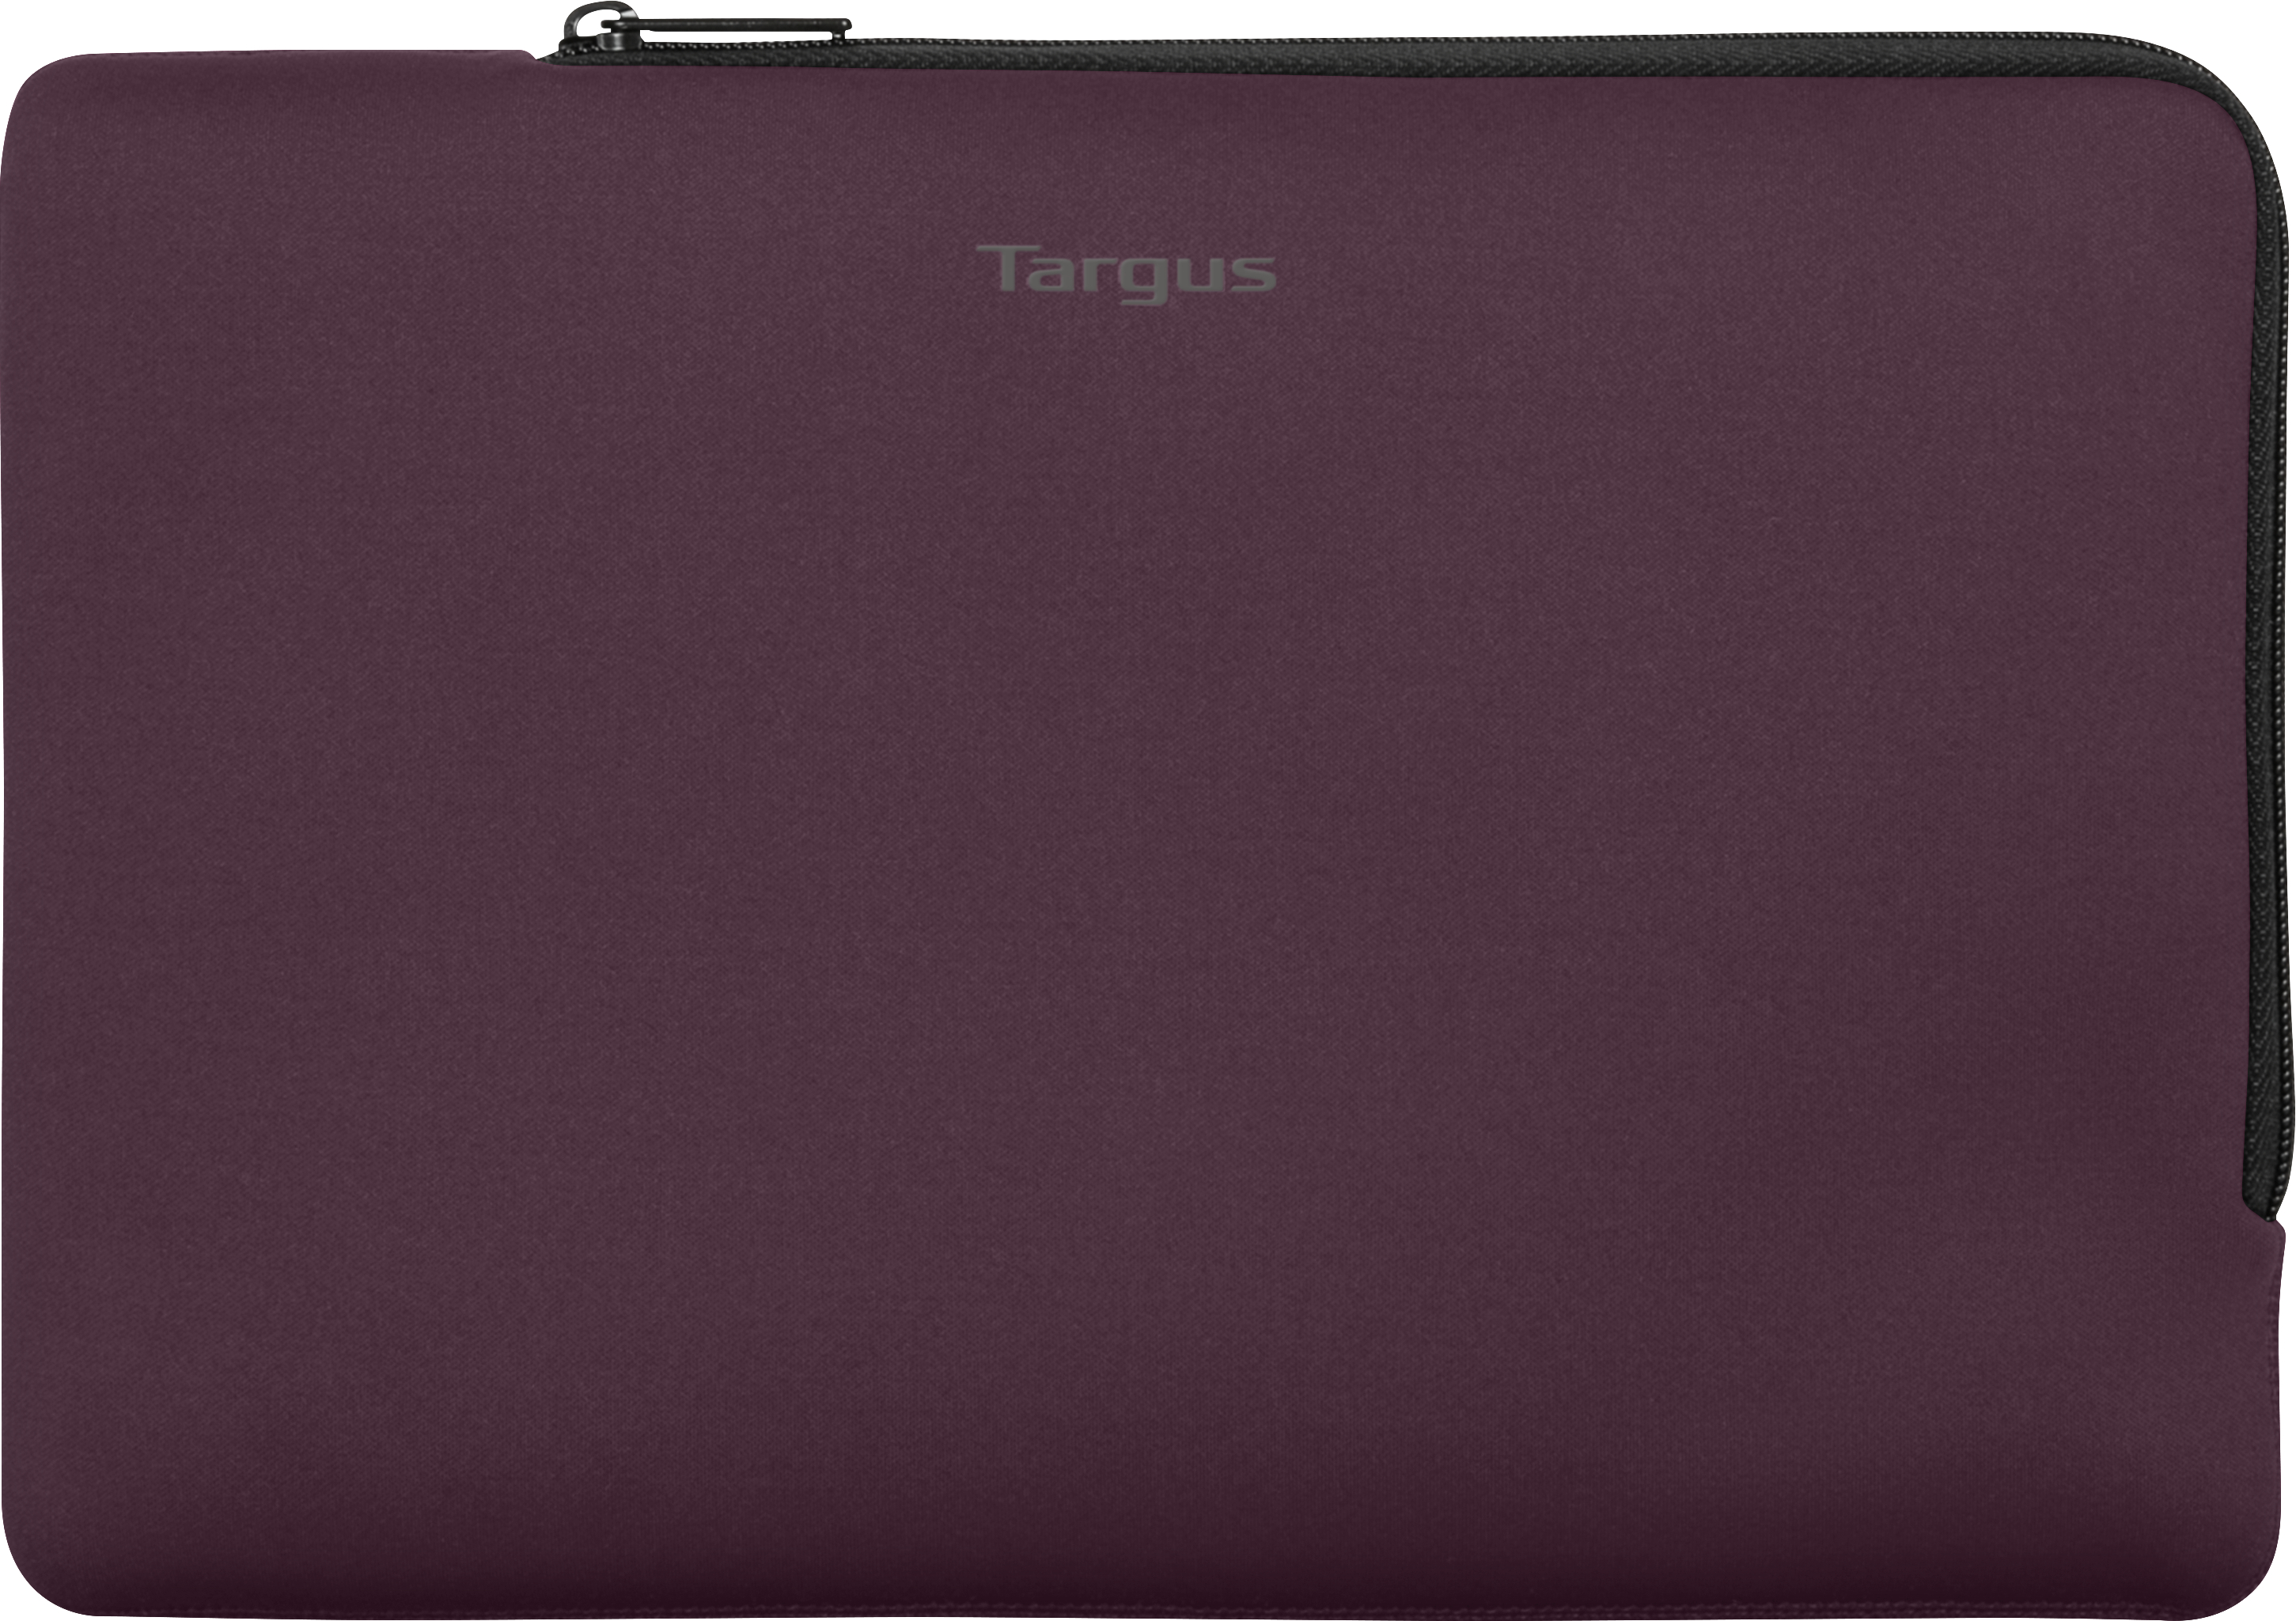 TARGUS Ecosmart MultiFit Sleeve Fig TBS65007GL for Universal 11-12 Inch